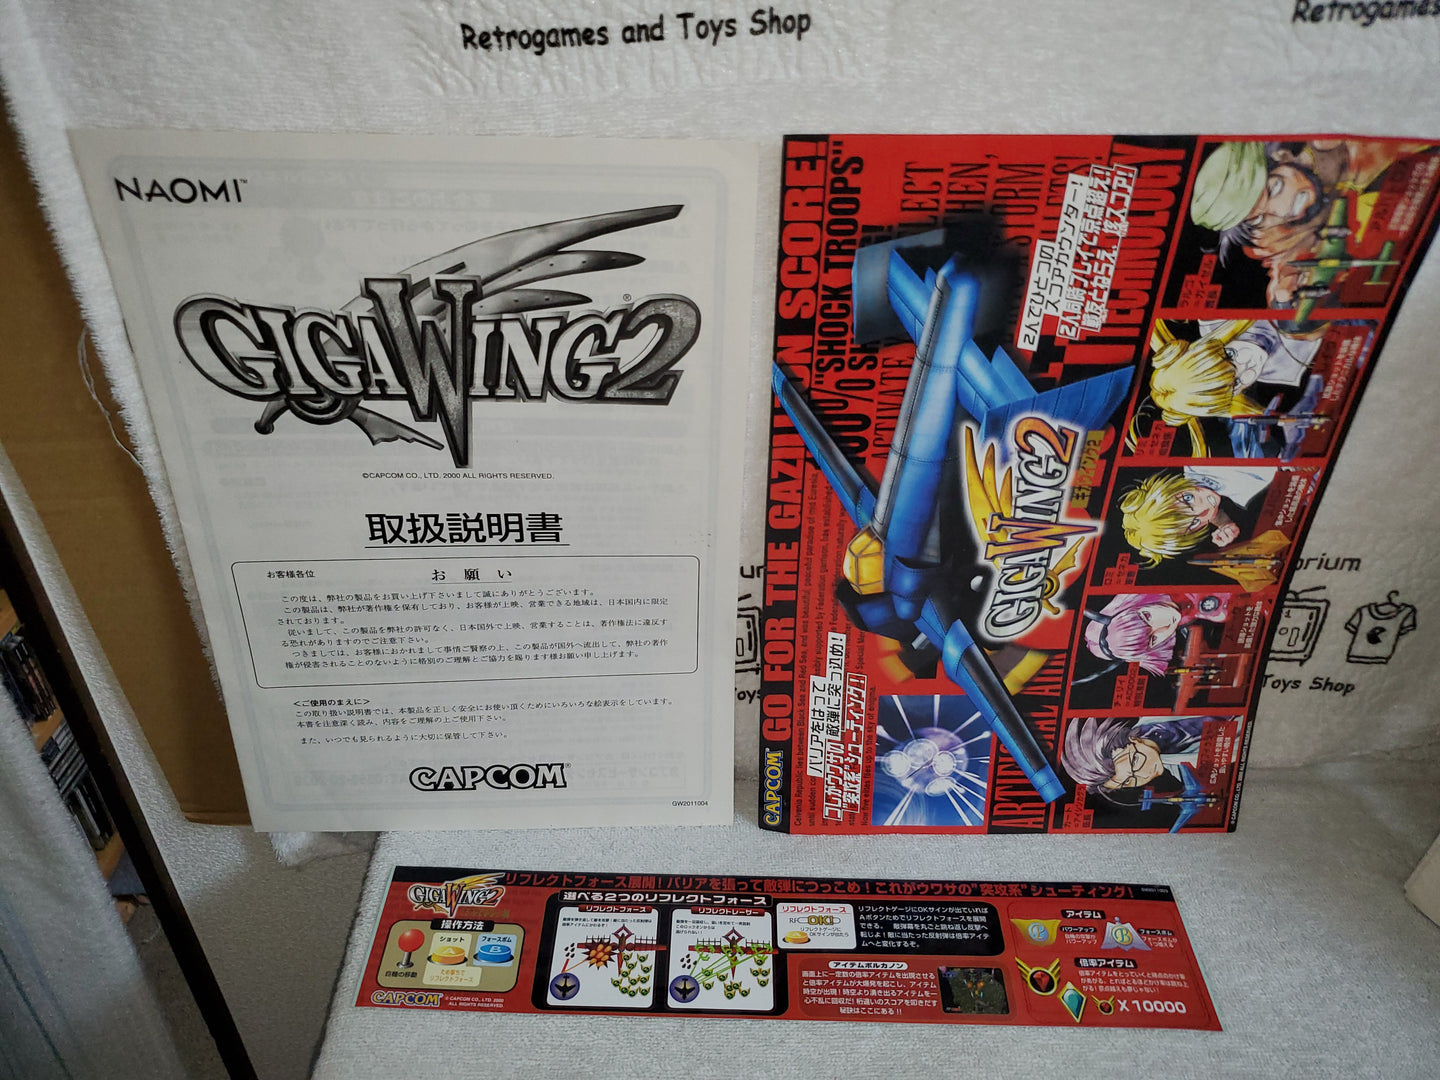 Gigawing 2 - arcade artset art set